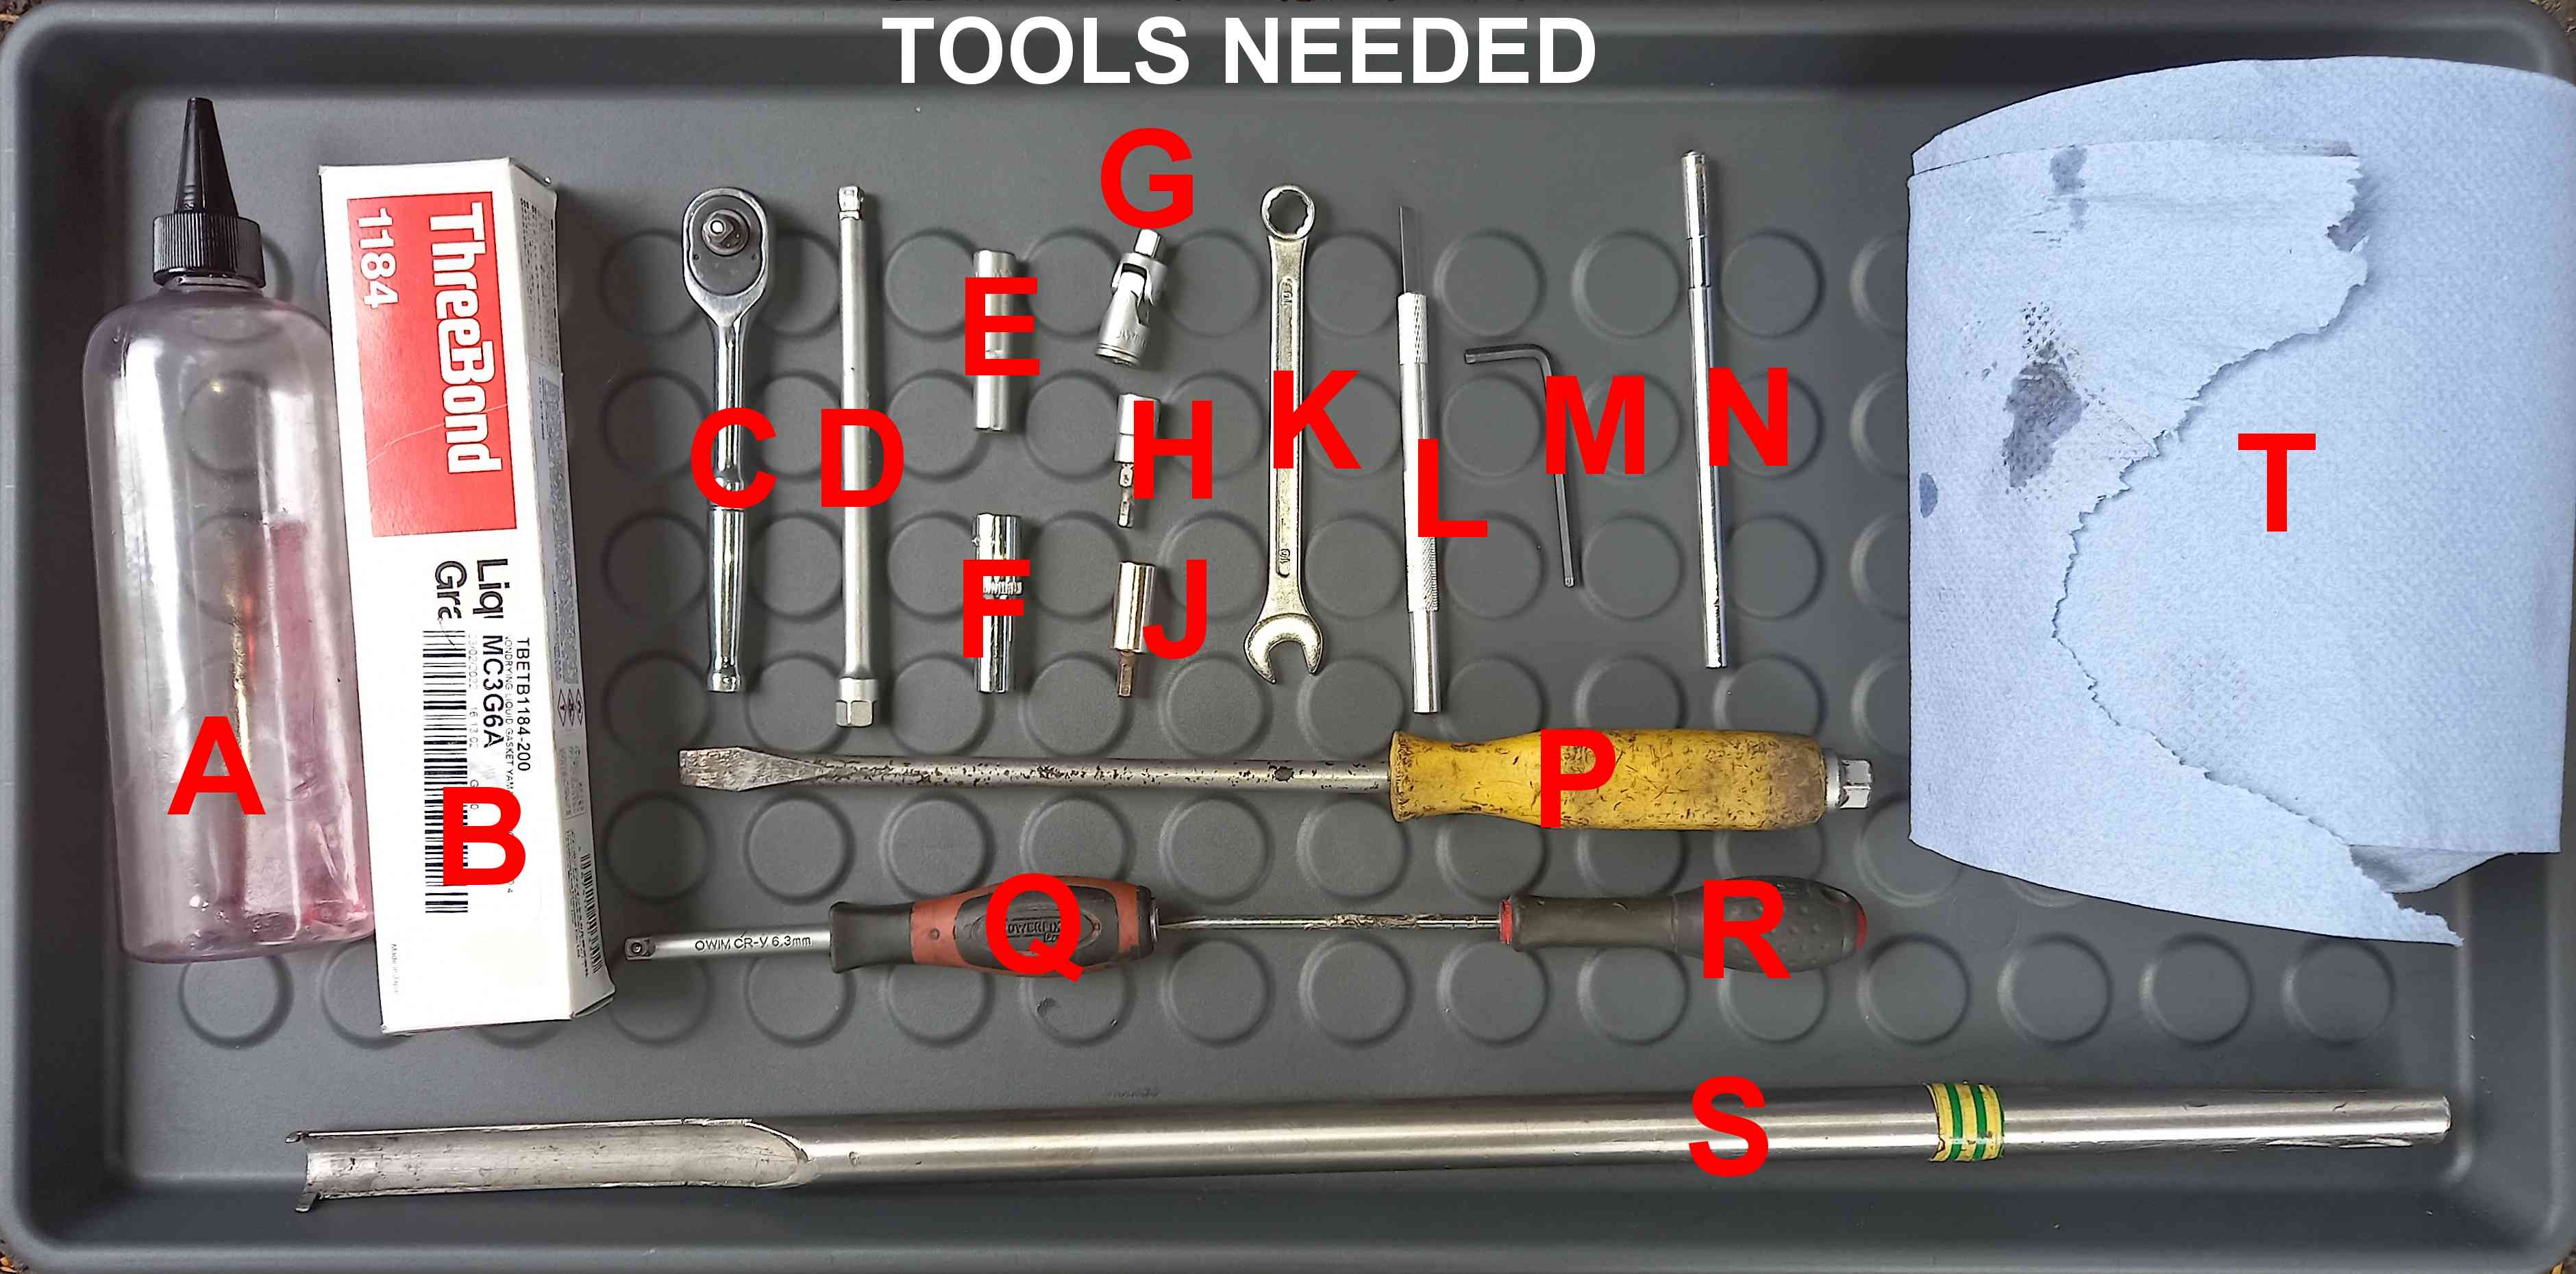 Tools needed